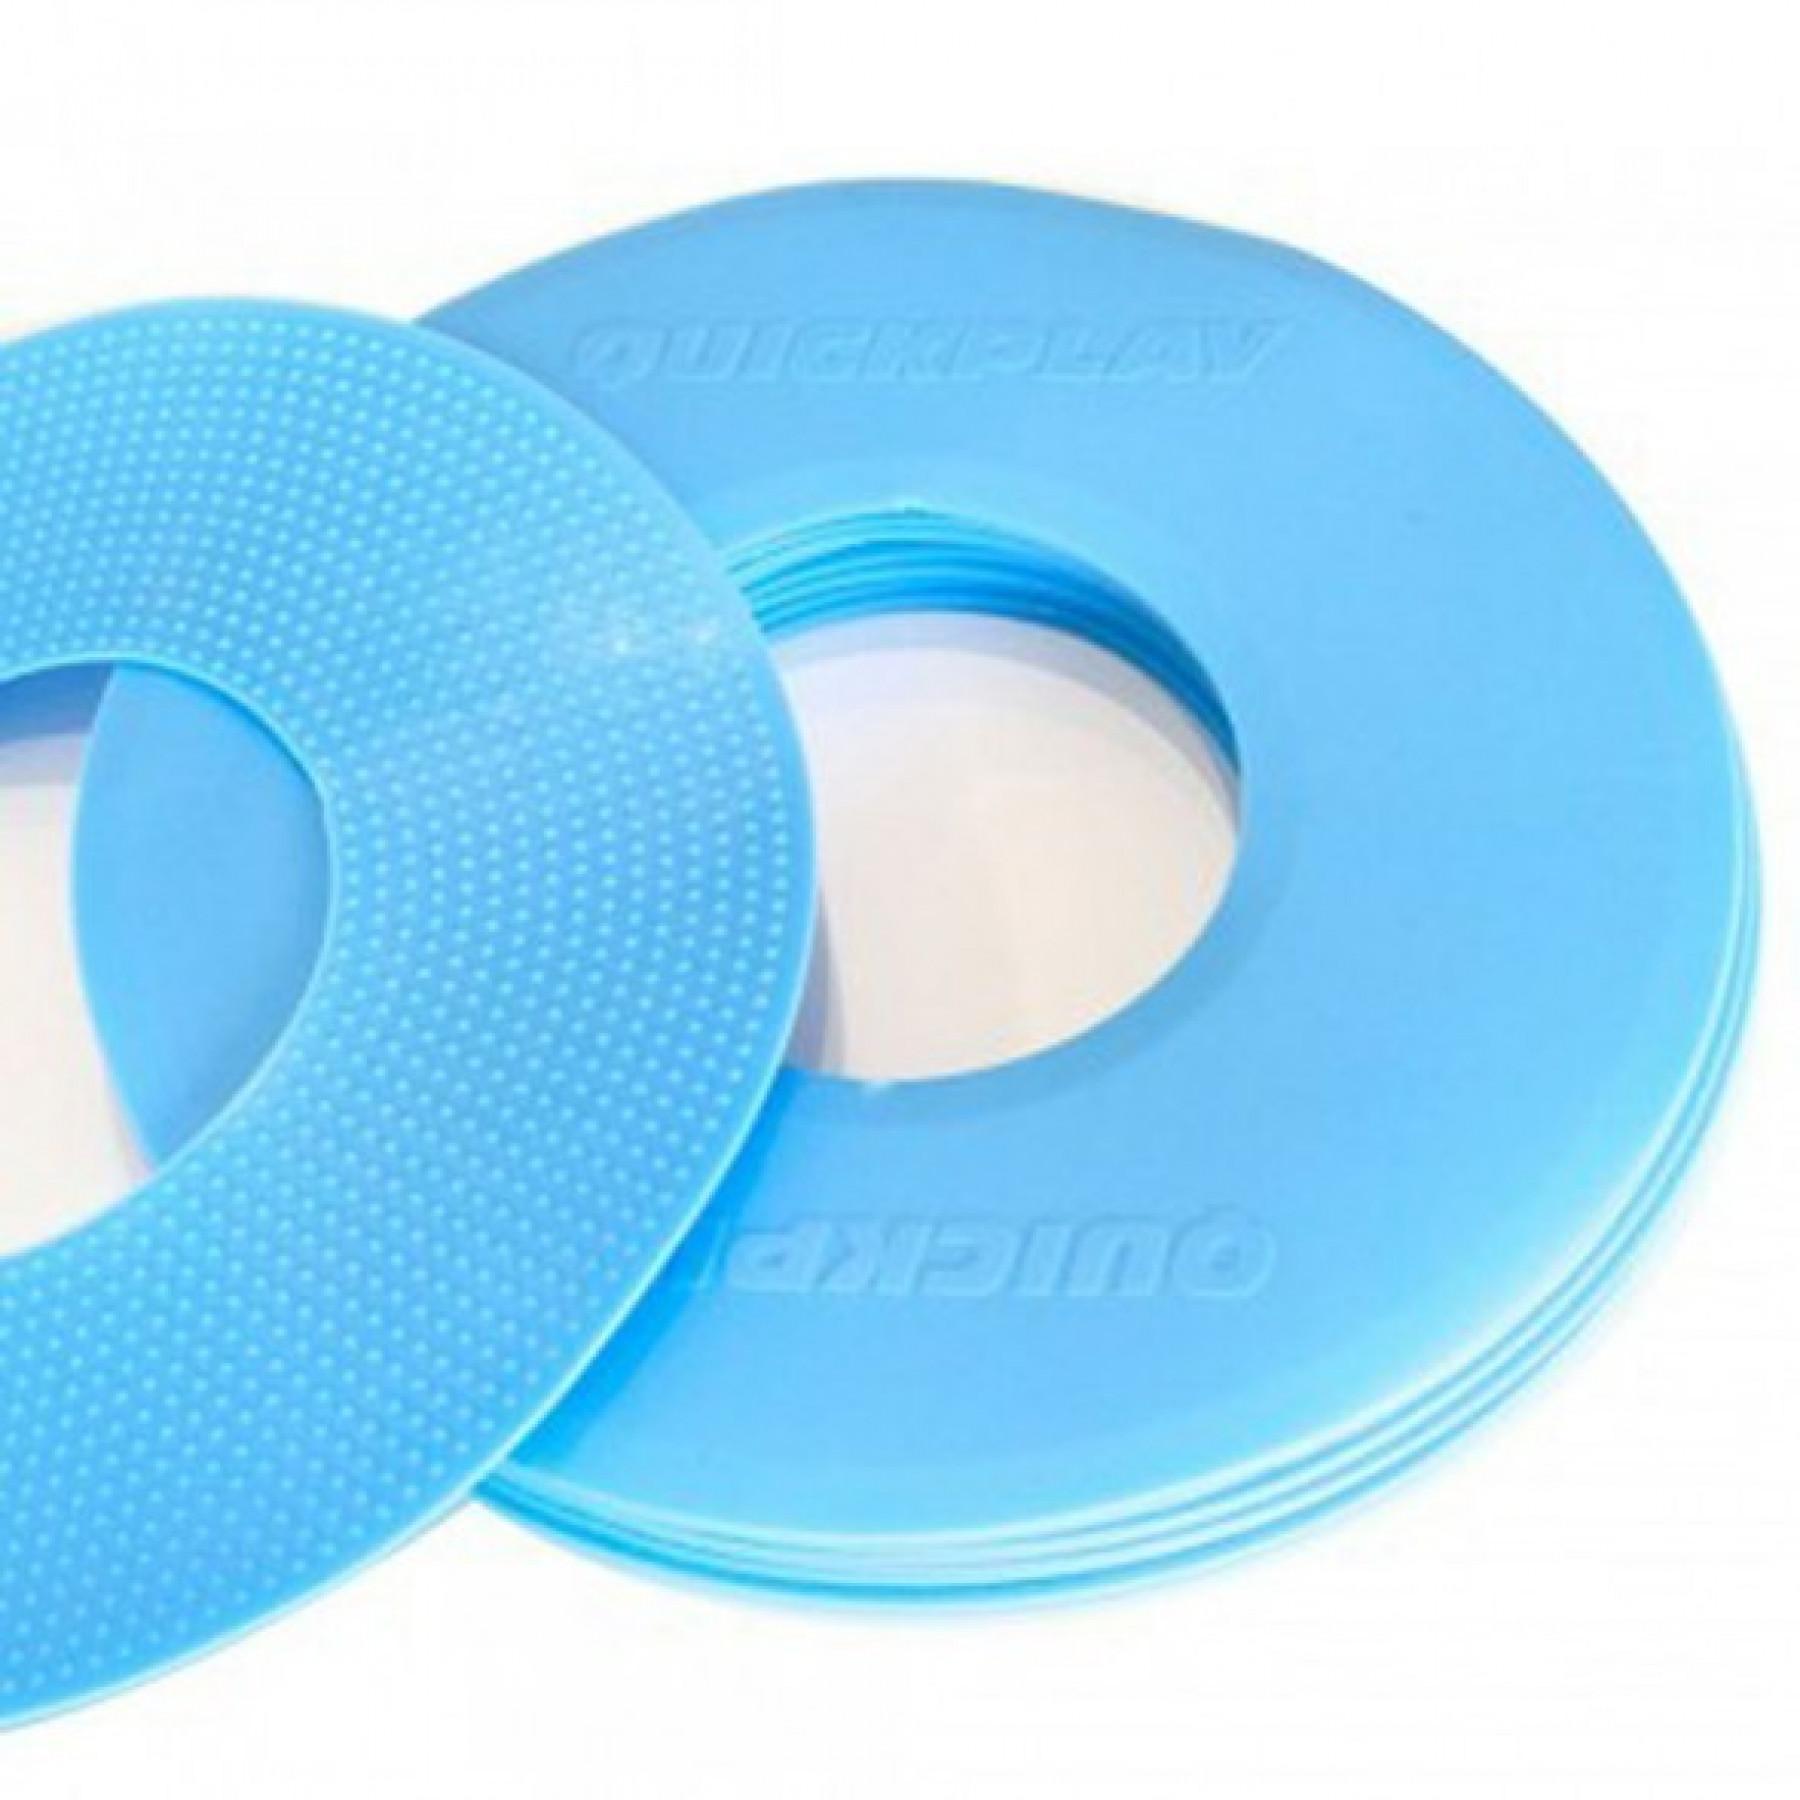 Pack of 10 marking discs Quickplay bleu